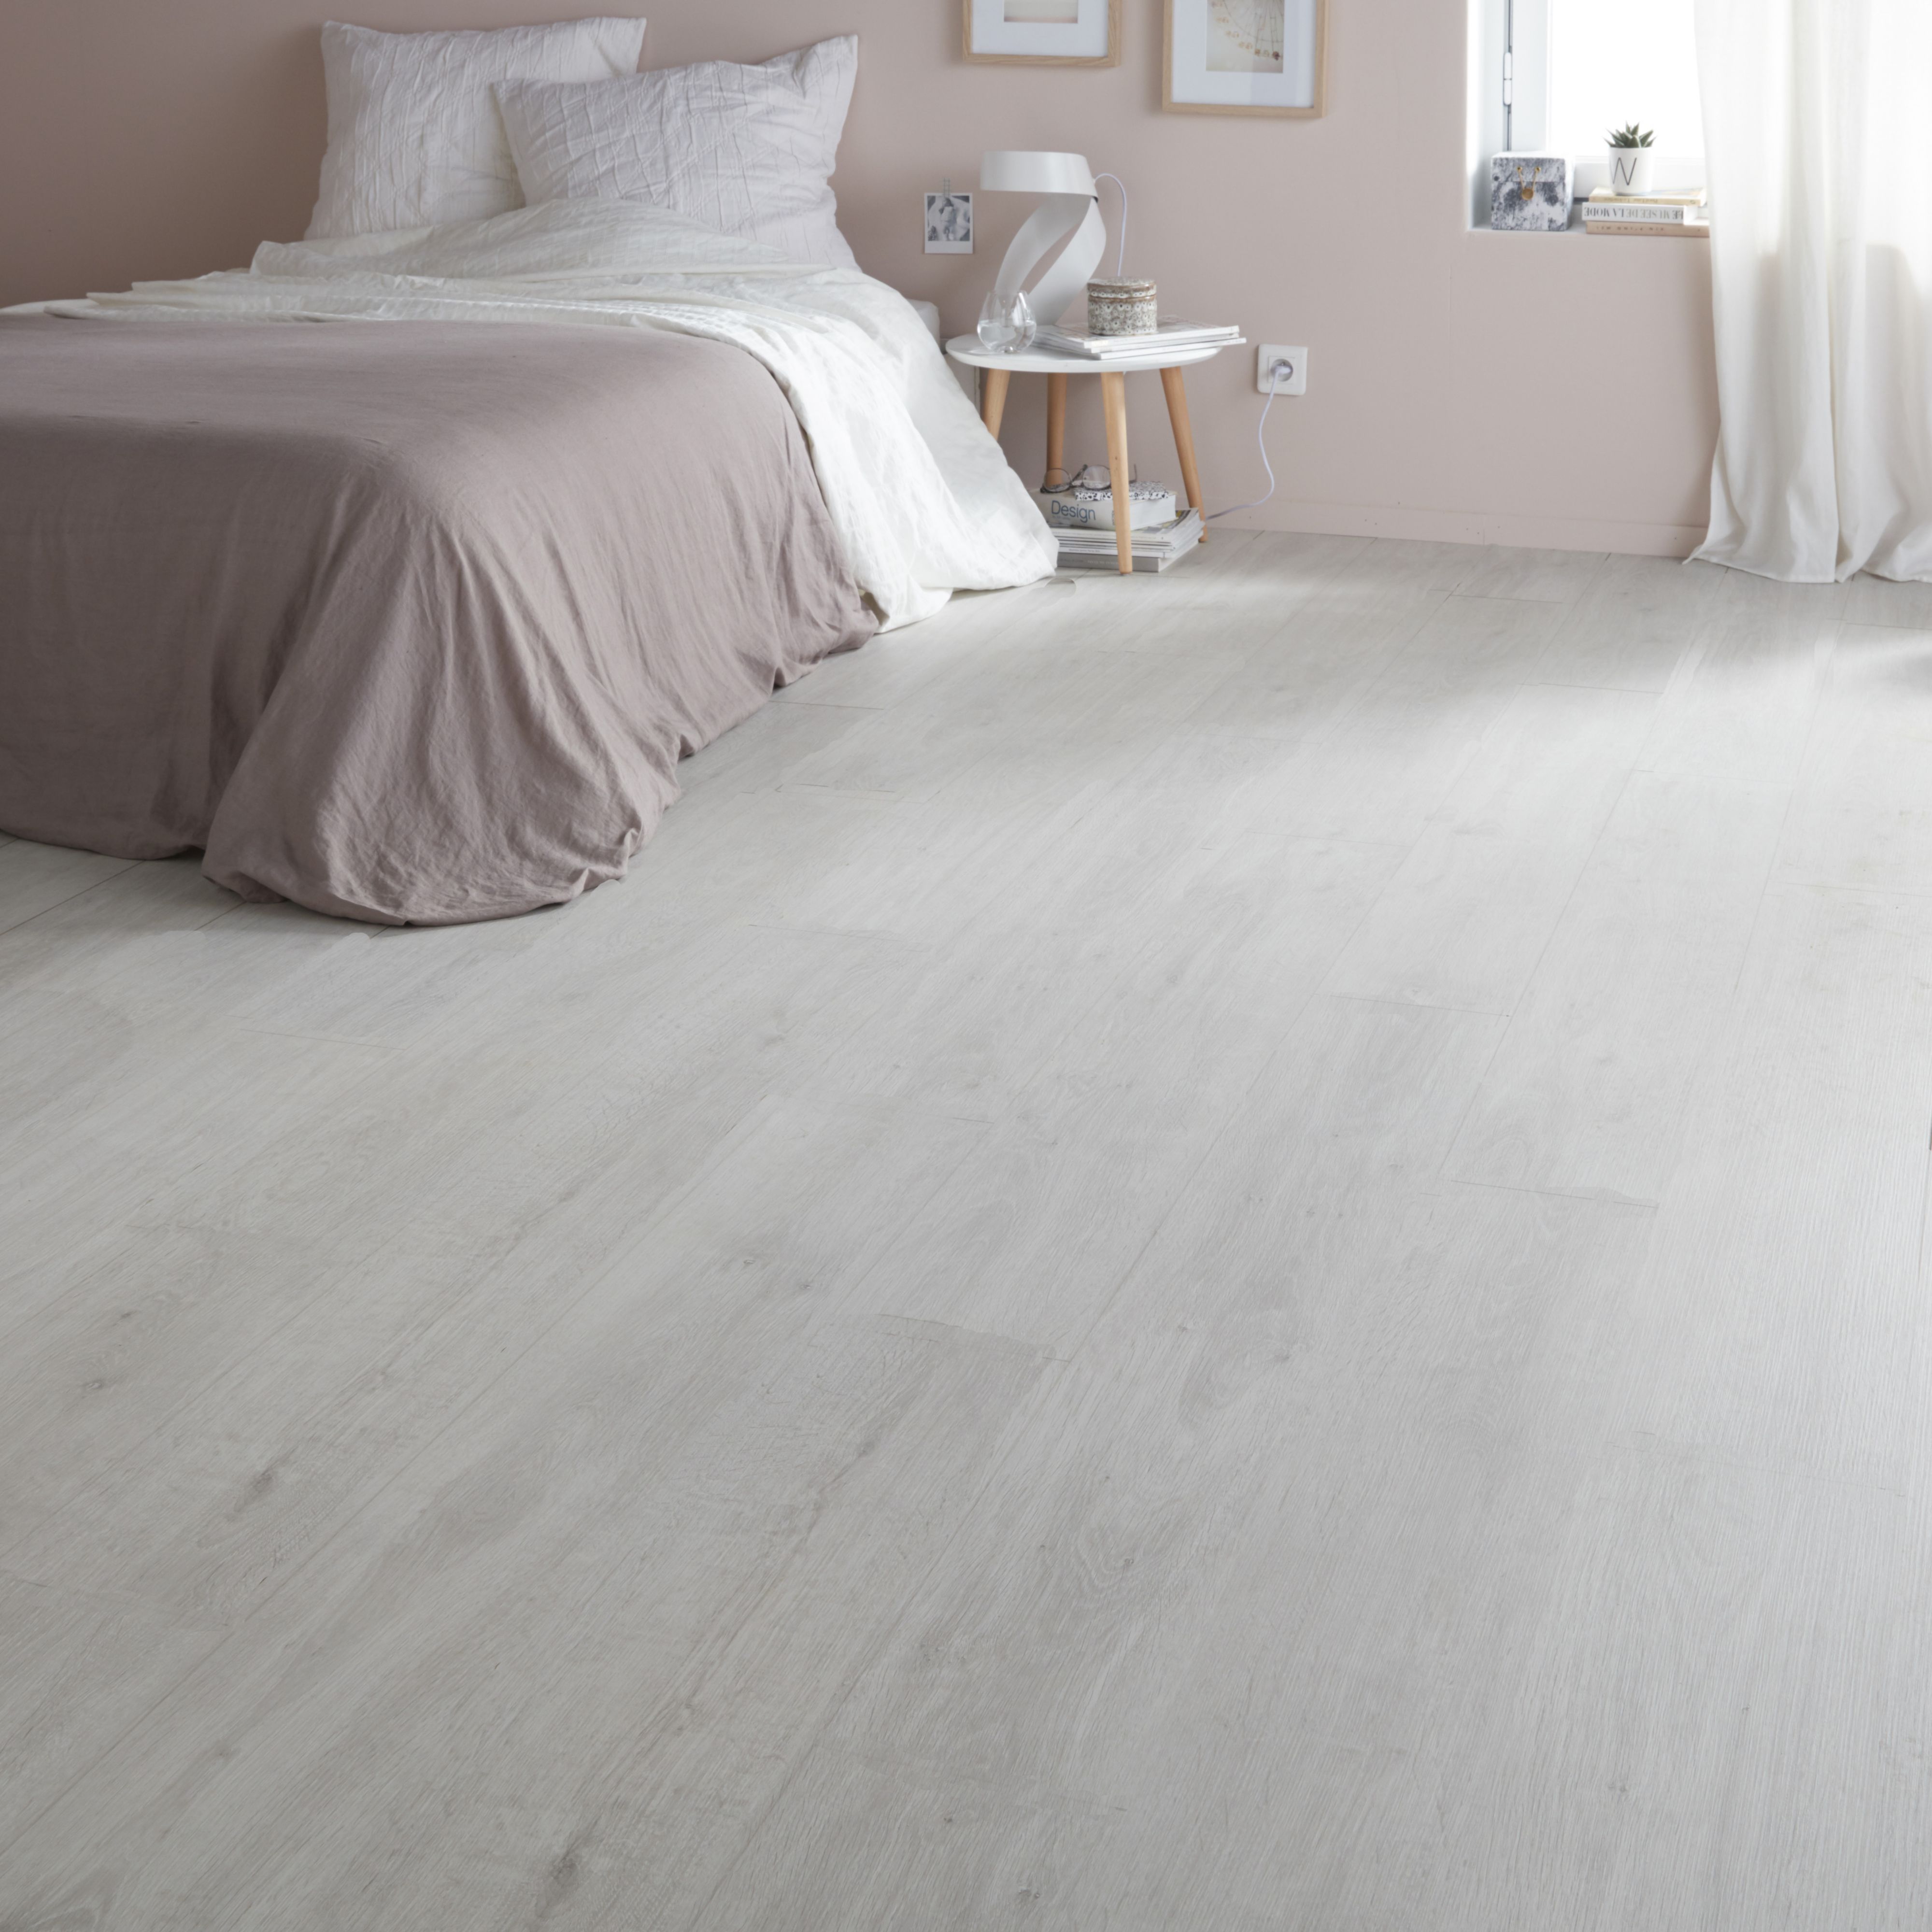 Goodhome Geelong Grey Oak Effect Laminate Flooring 2 47m Pack Departments Diy At B Q